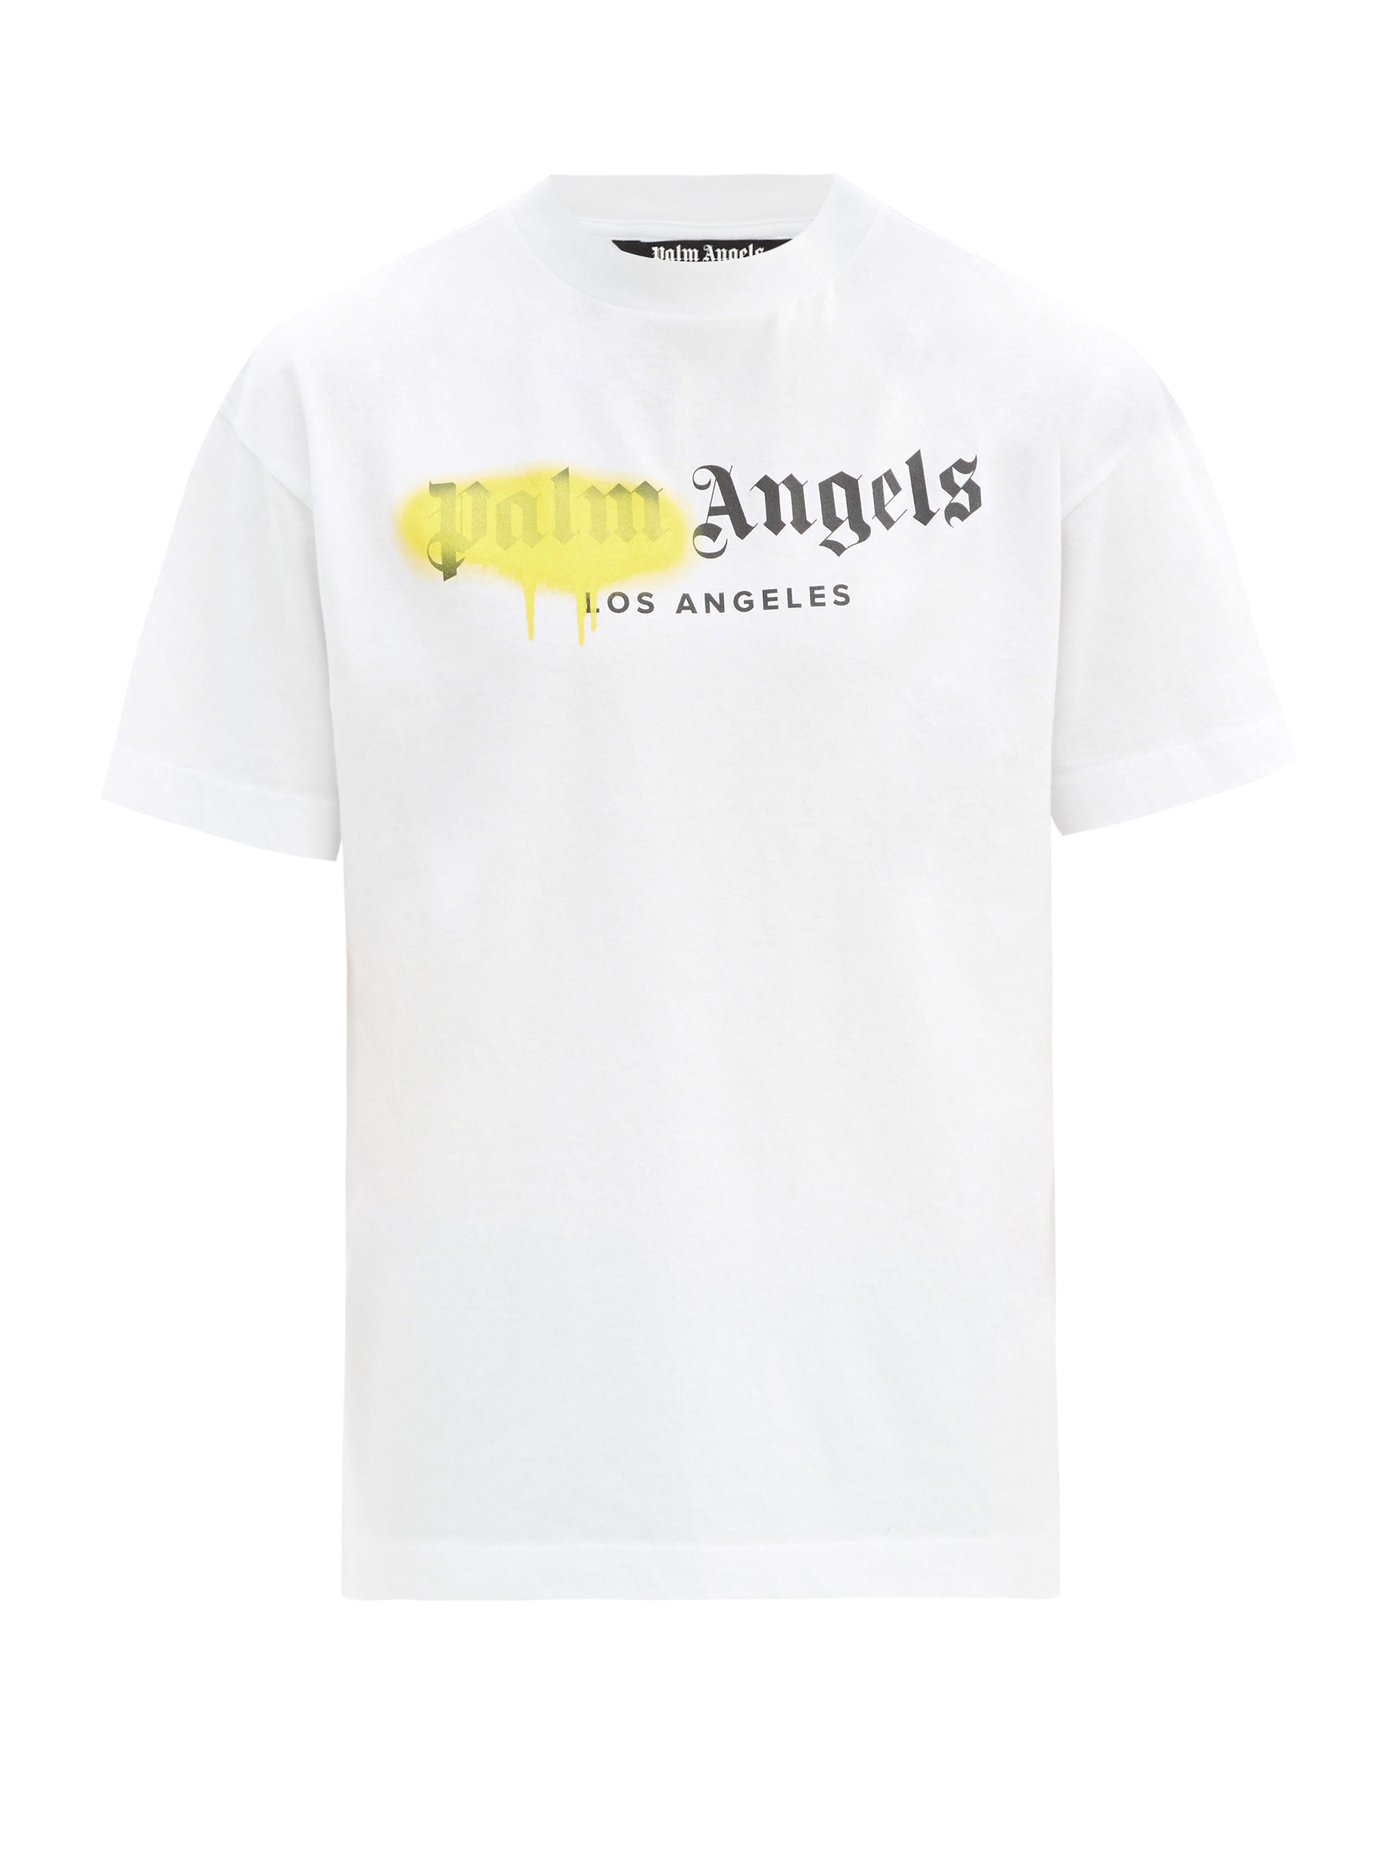 la angels t shirt